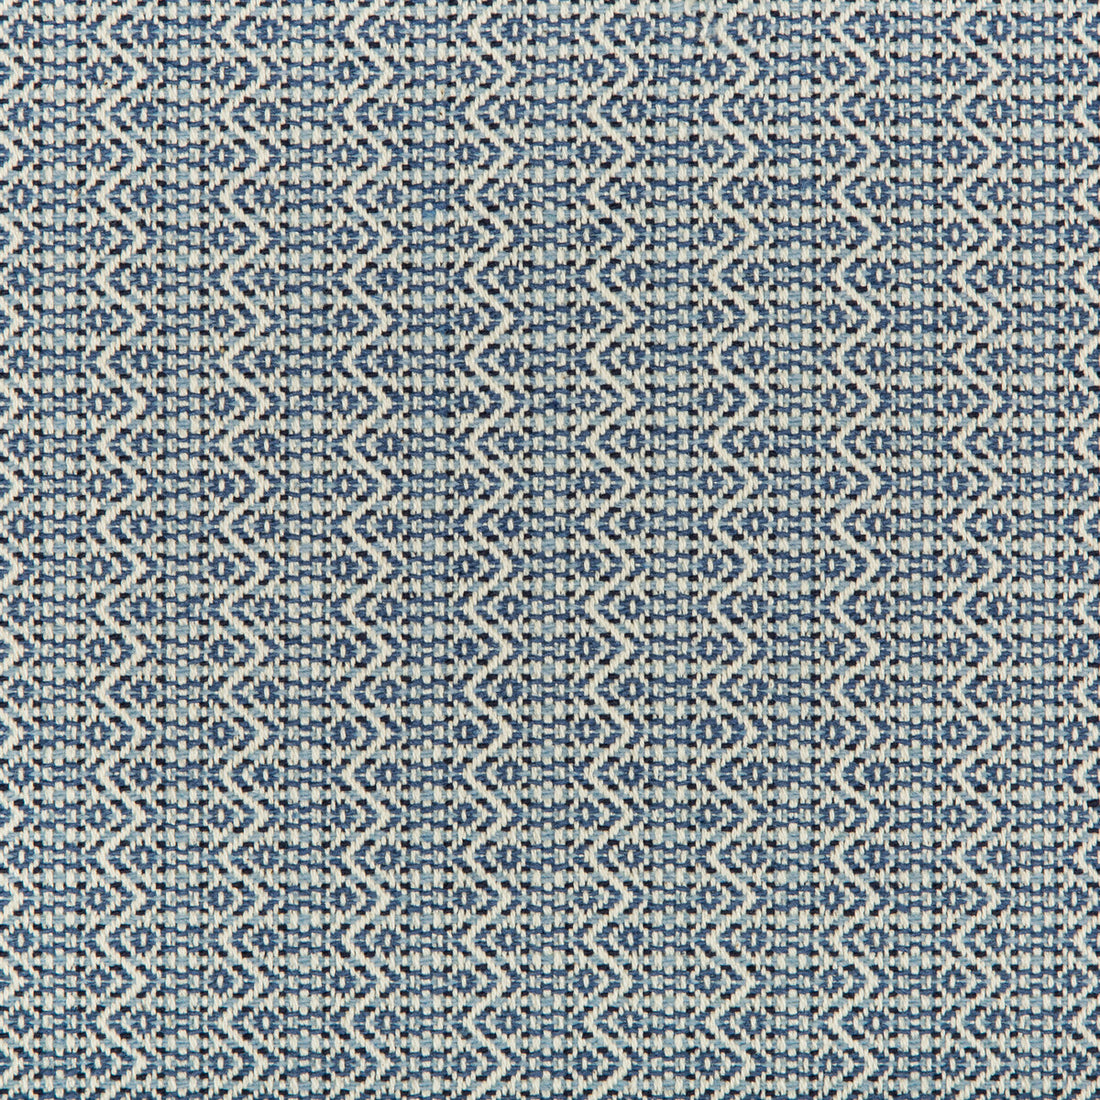 Kravet Fabric fabric in 35621-5 color - pattern 35621.5.0 - by Kravet Design